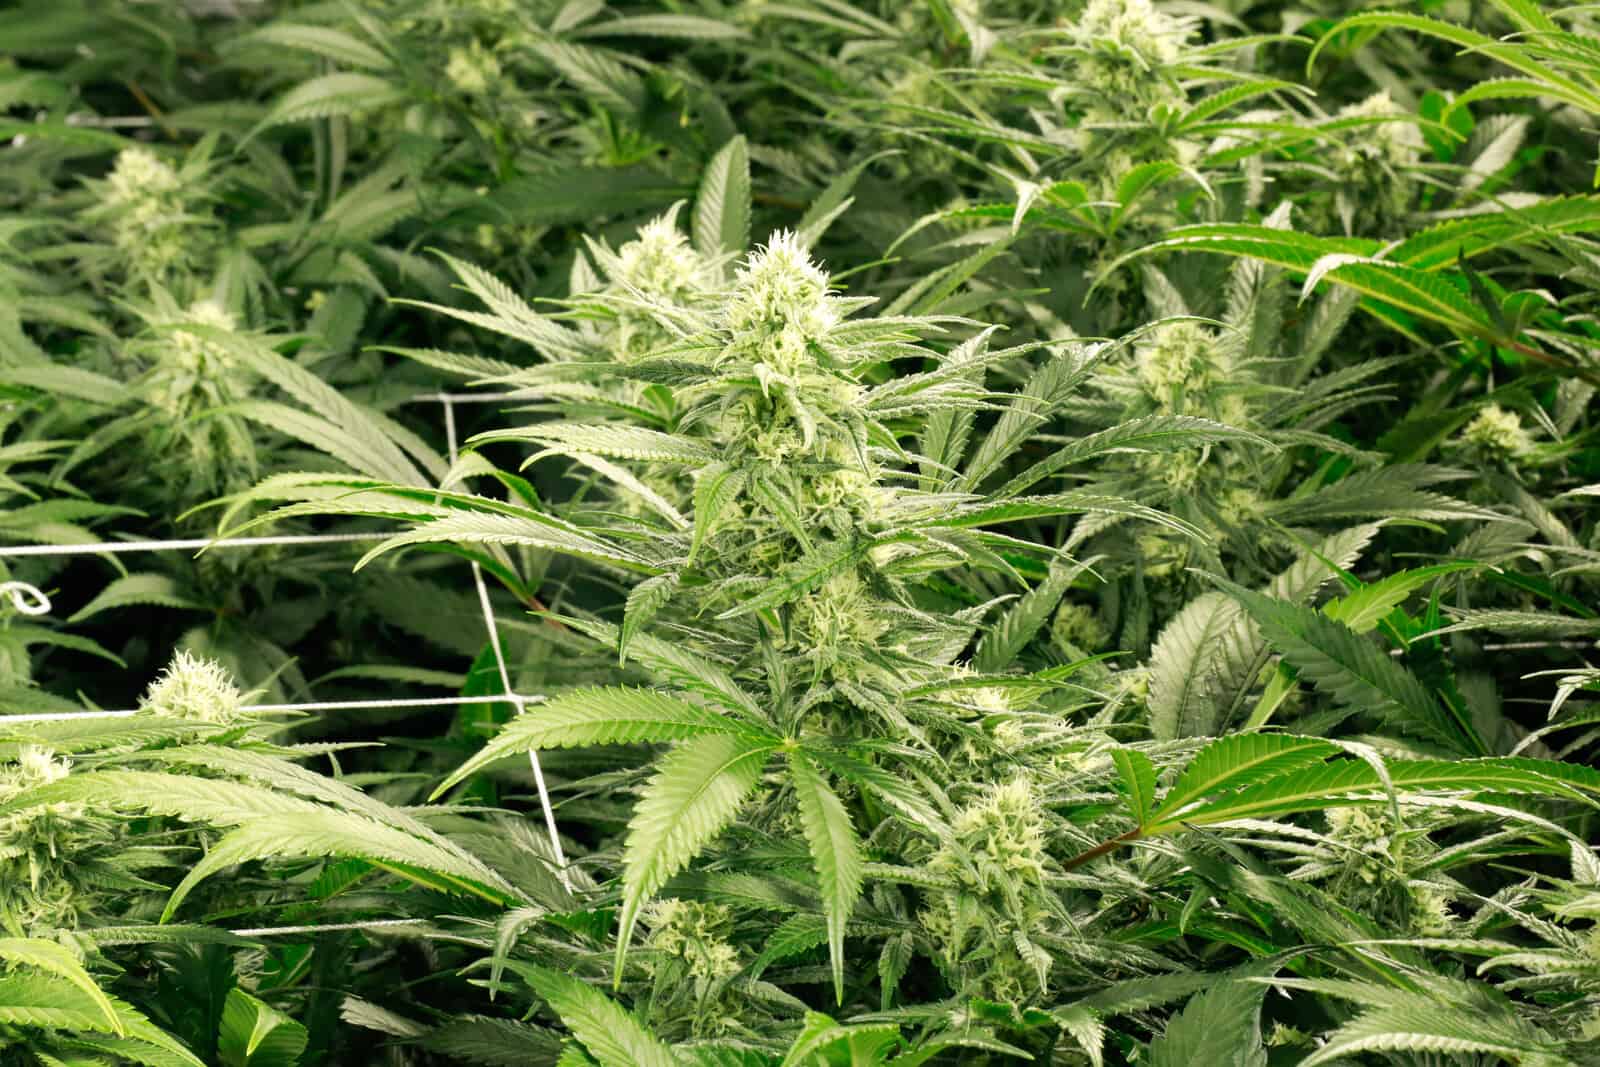 Grow Room Design for Marijuana Growing